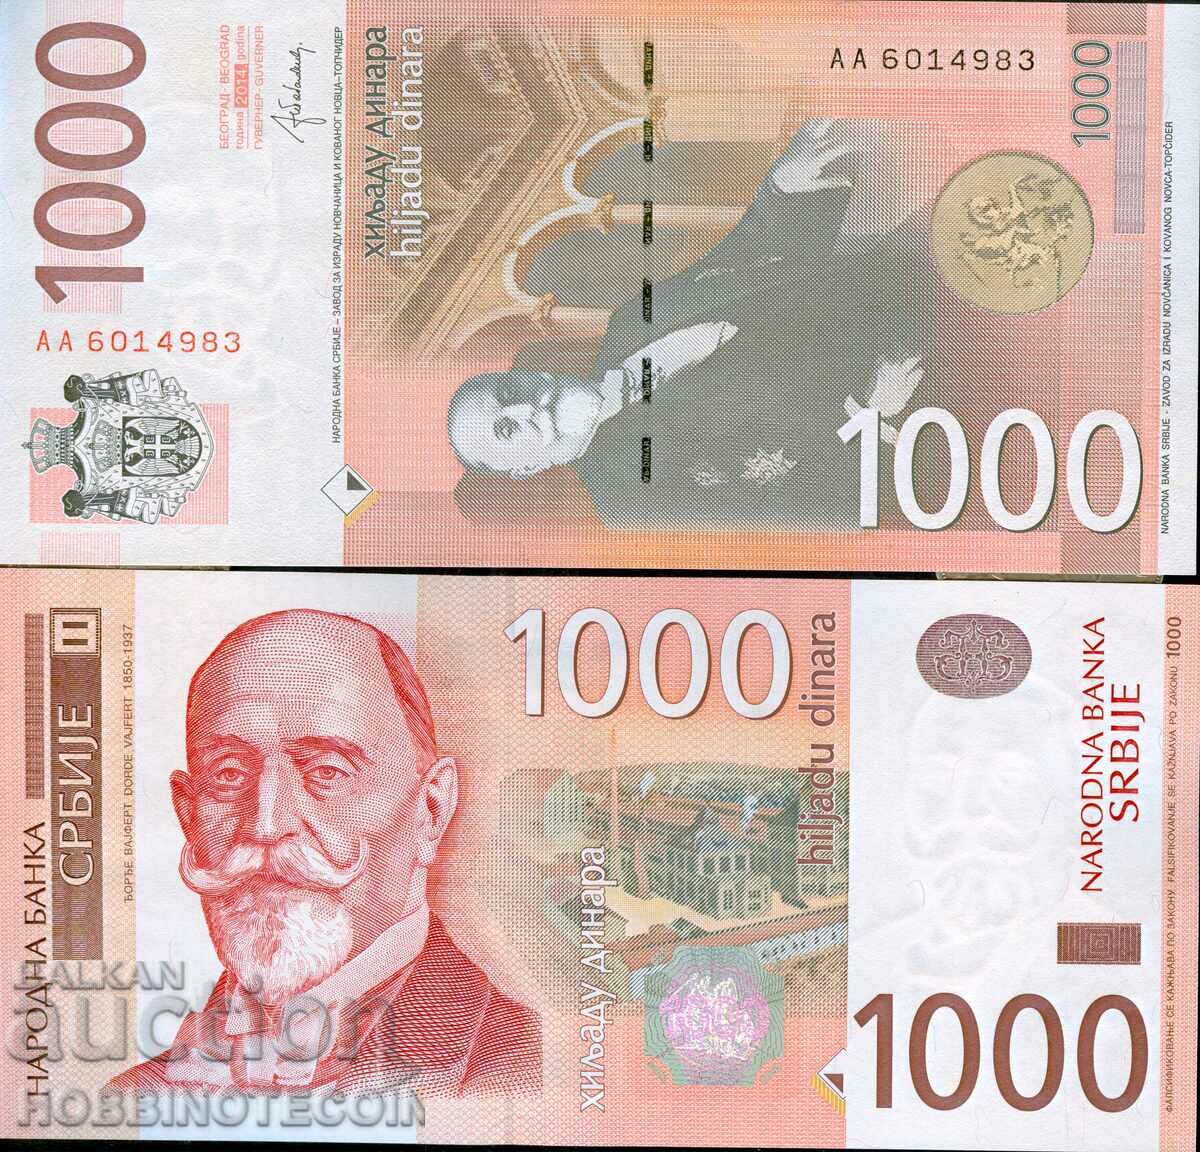 SERBIA SERBIA 1000 - 1000 Dinar issue 2014 NEW UNC